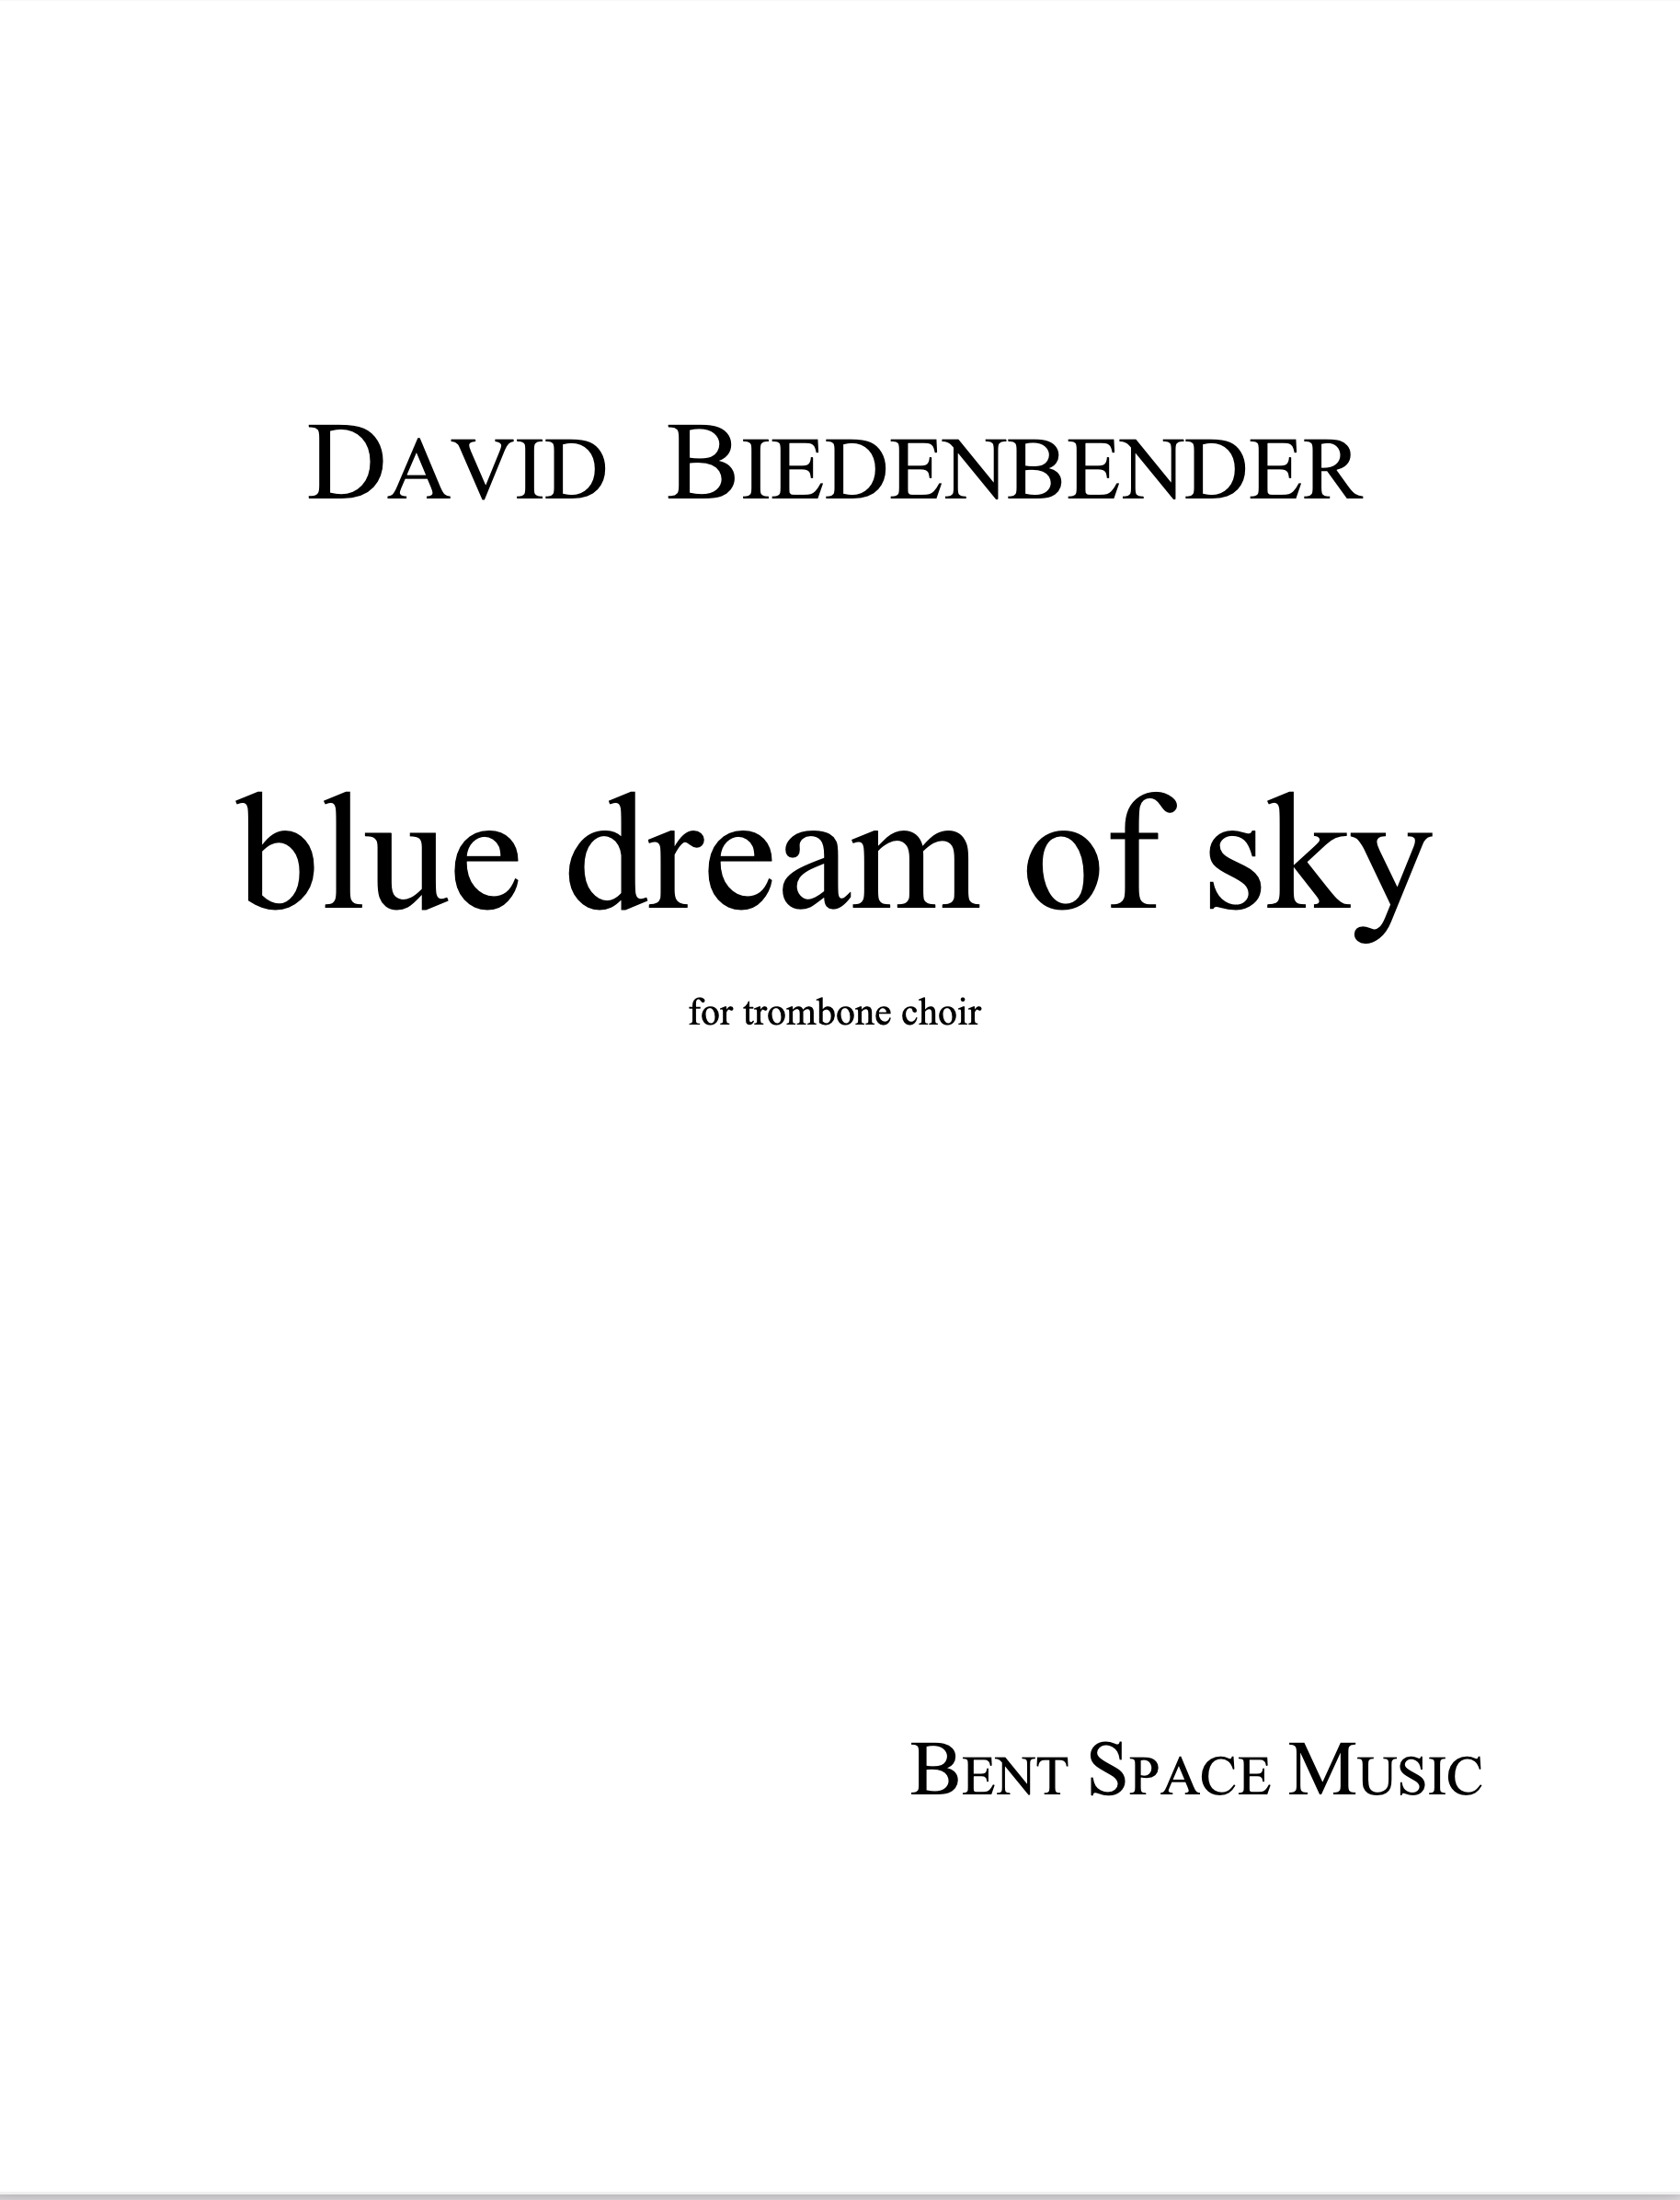 Blue Dream Of Sky by David Biedenbender